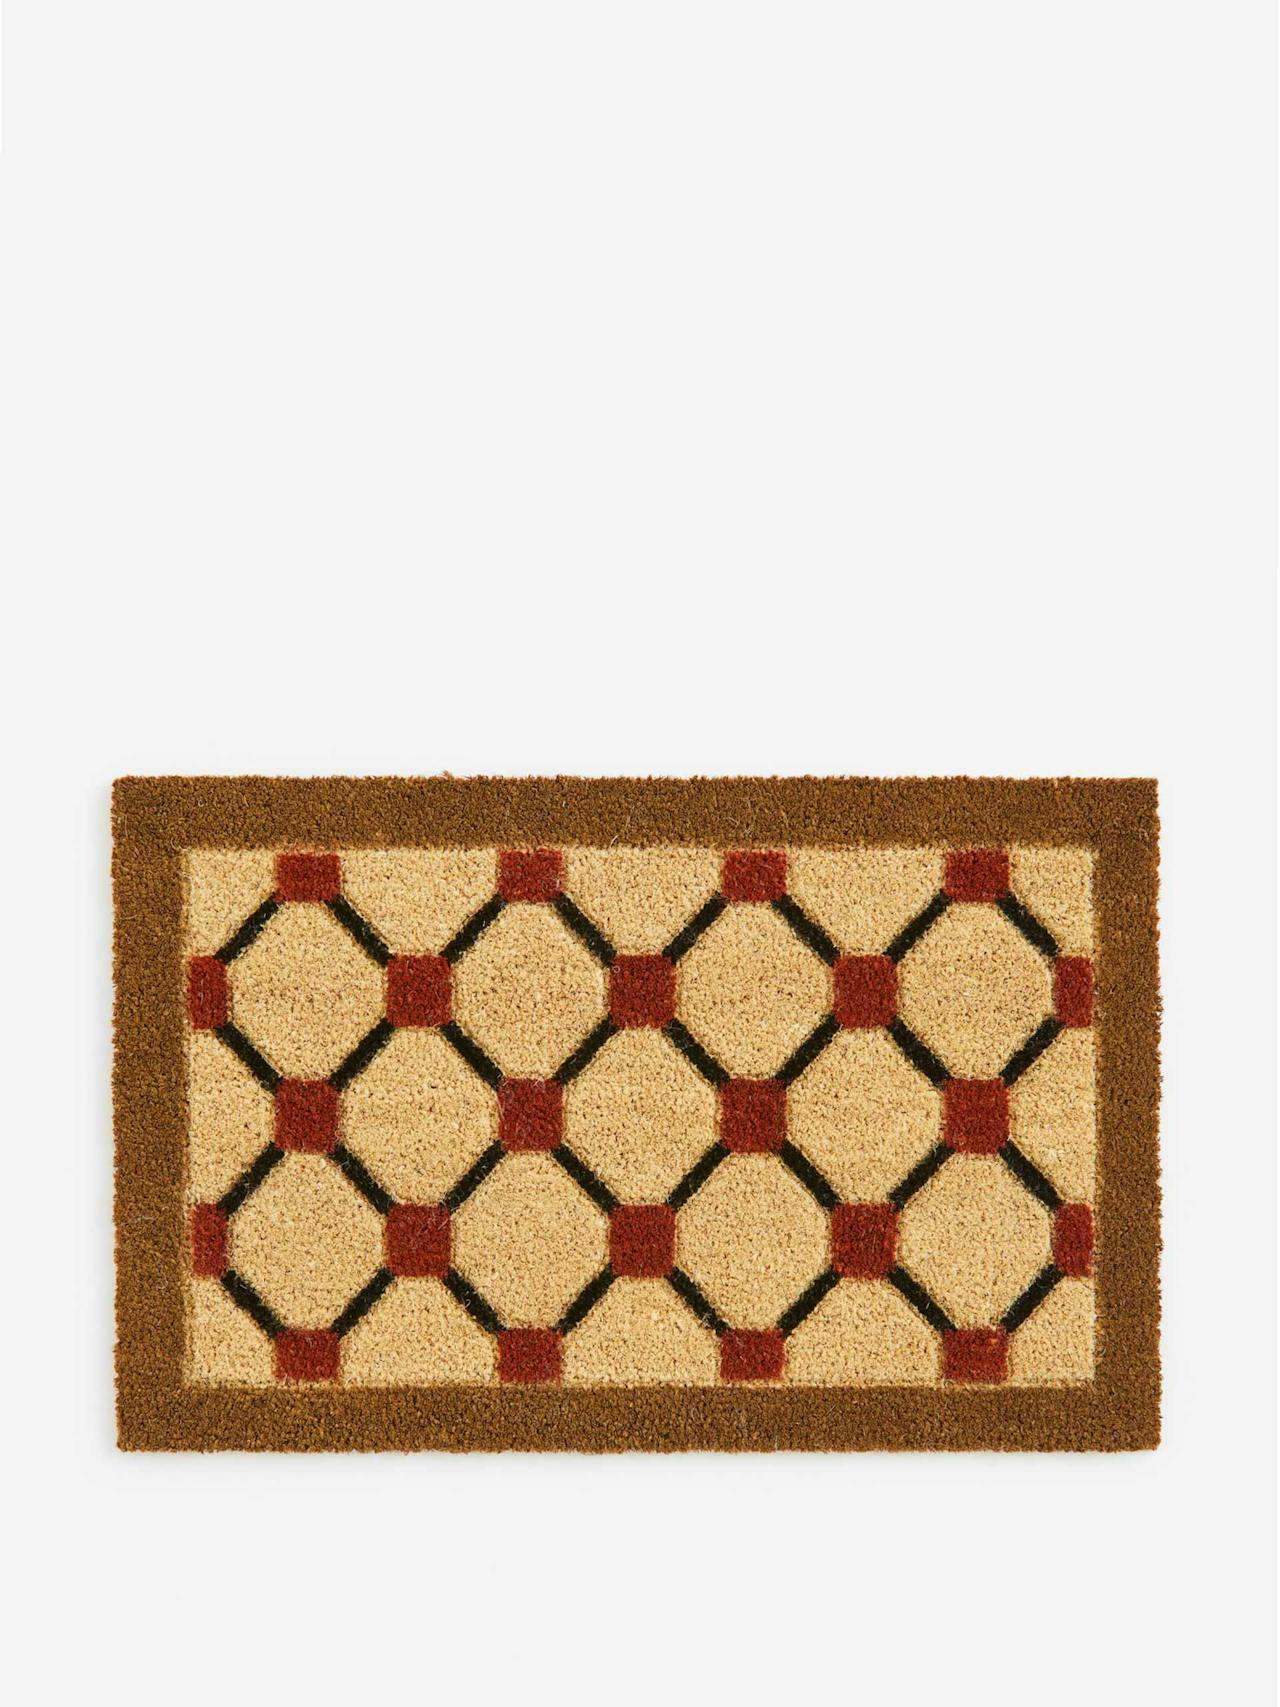 Brown patterned doormat